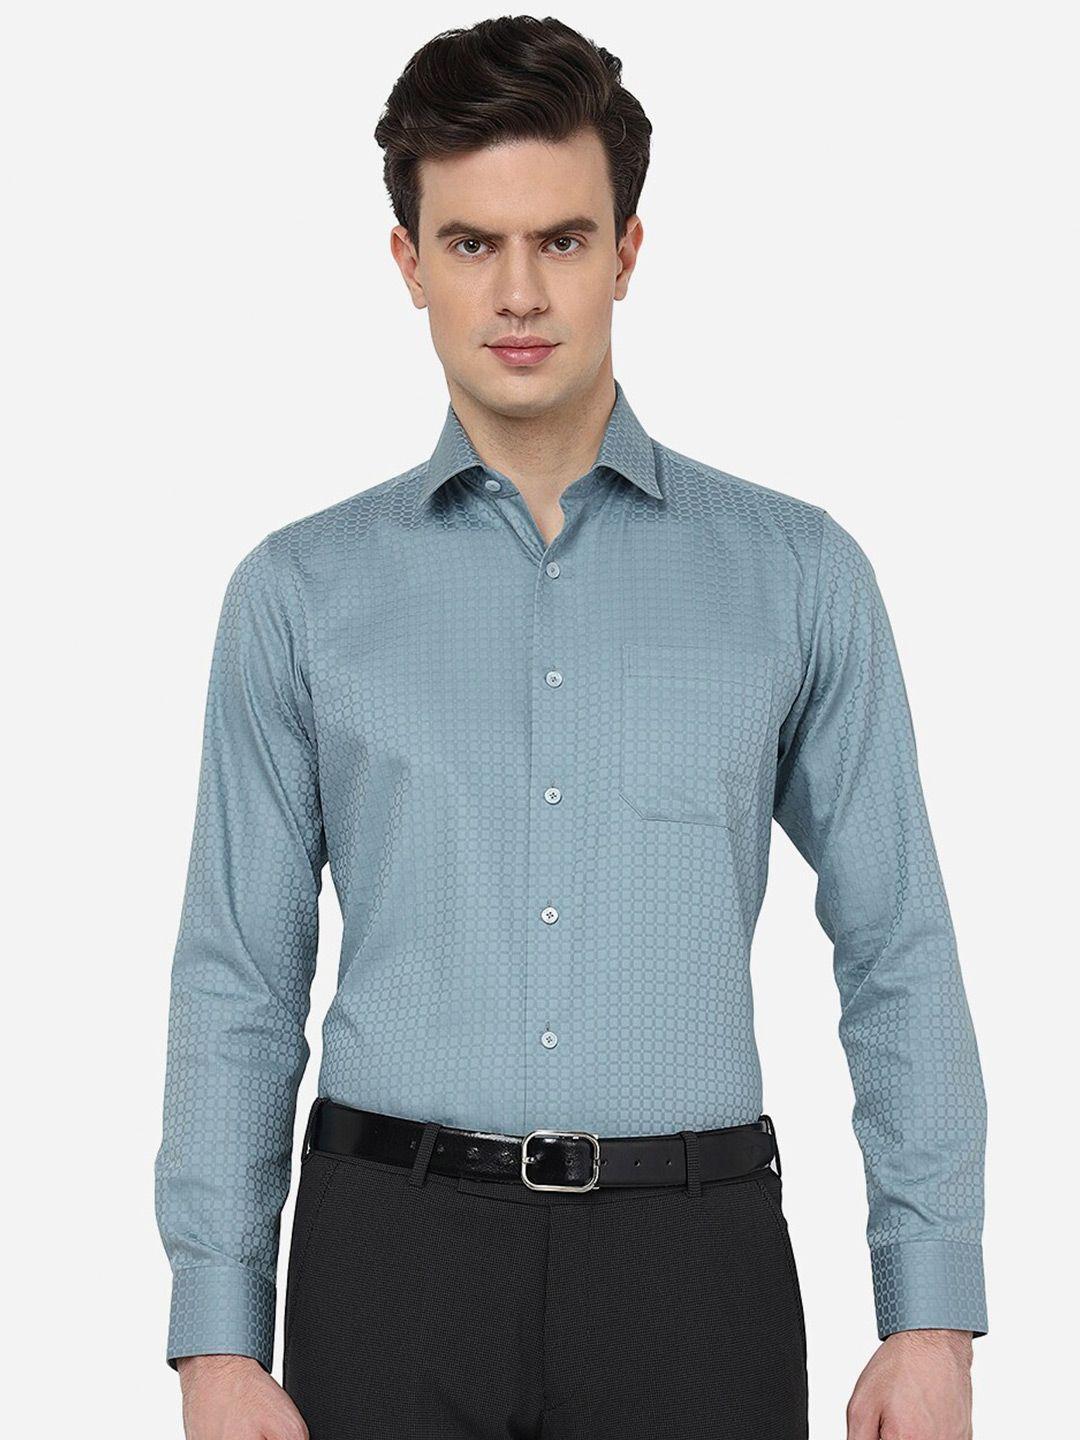 jade blue spread collar long sleeve opaque regular fit formal shirt